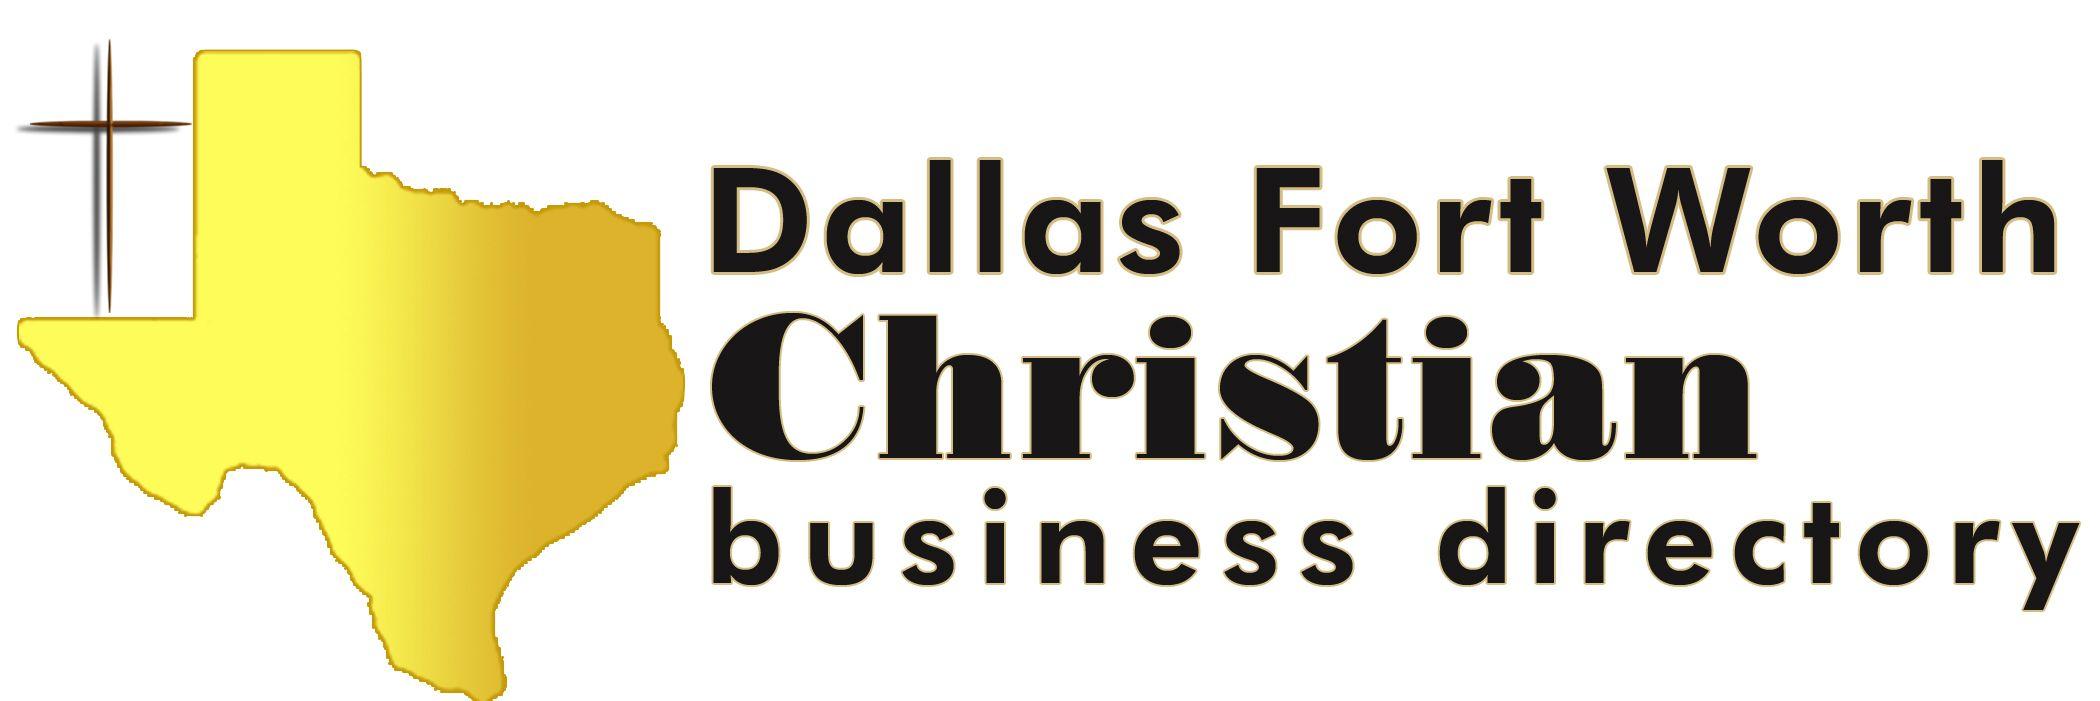 Christian Business Logo - Business Directory. Dallas Fort Worth Christian Business Directory